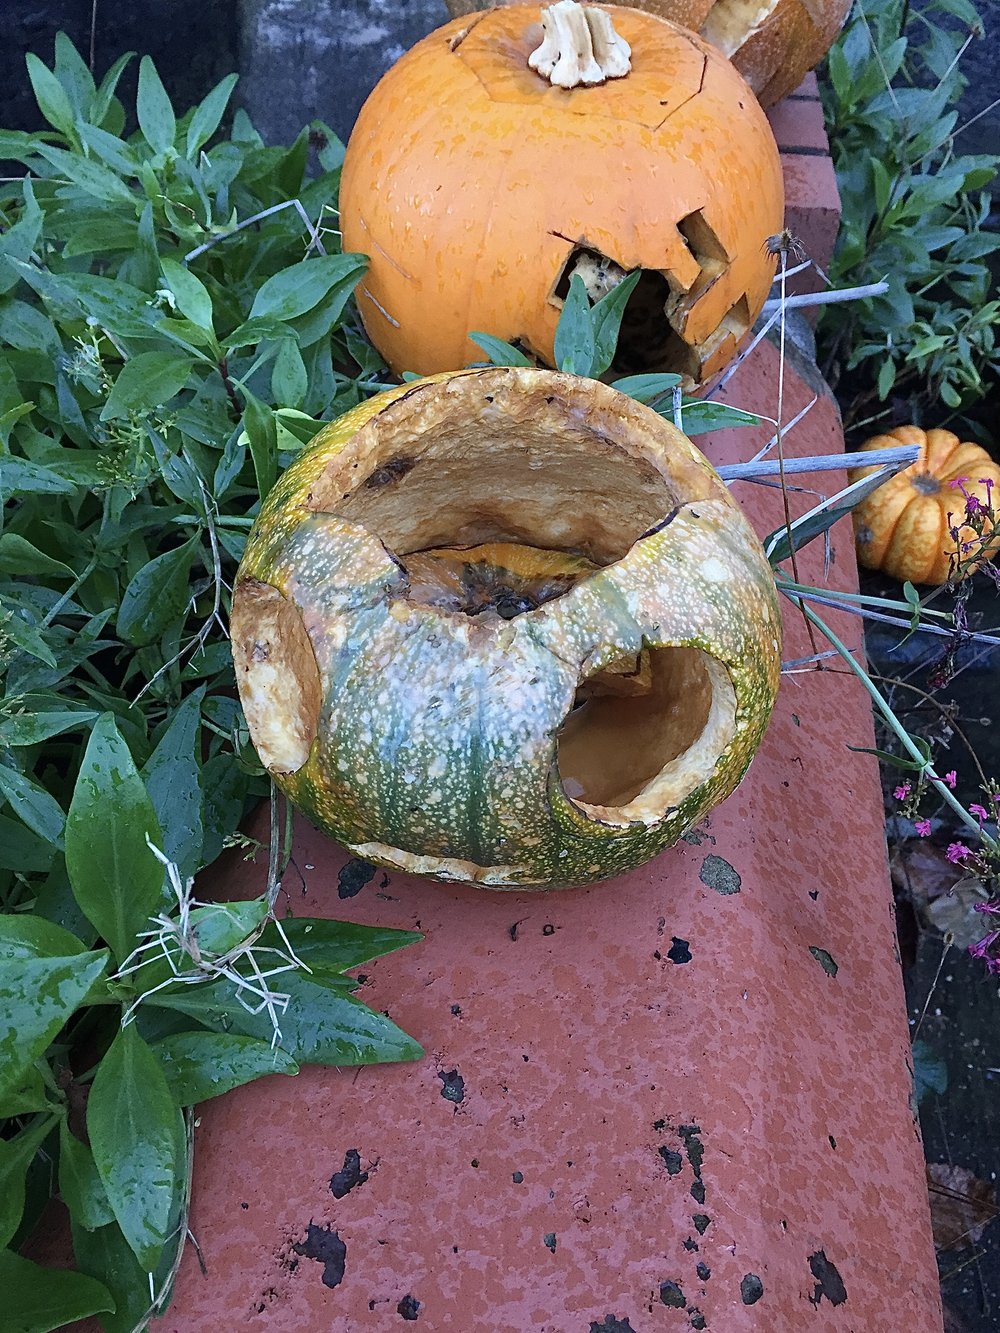  An unhappy green carved pumpkin, beginning its demise 